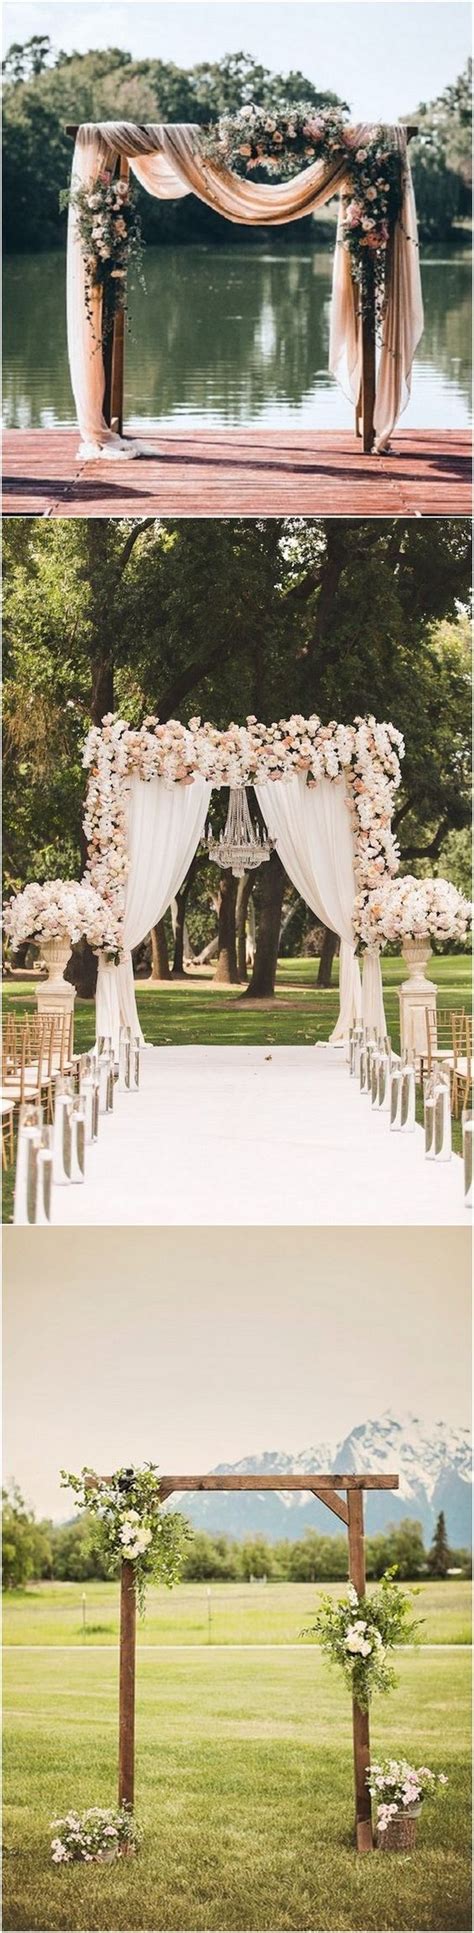 10 Stunning Wedding Arch Ideas For Your Ceremony Wedding Arch